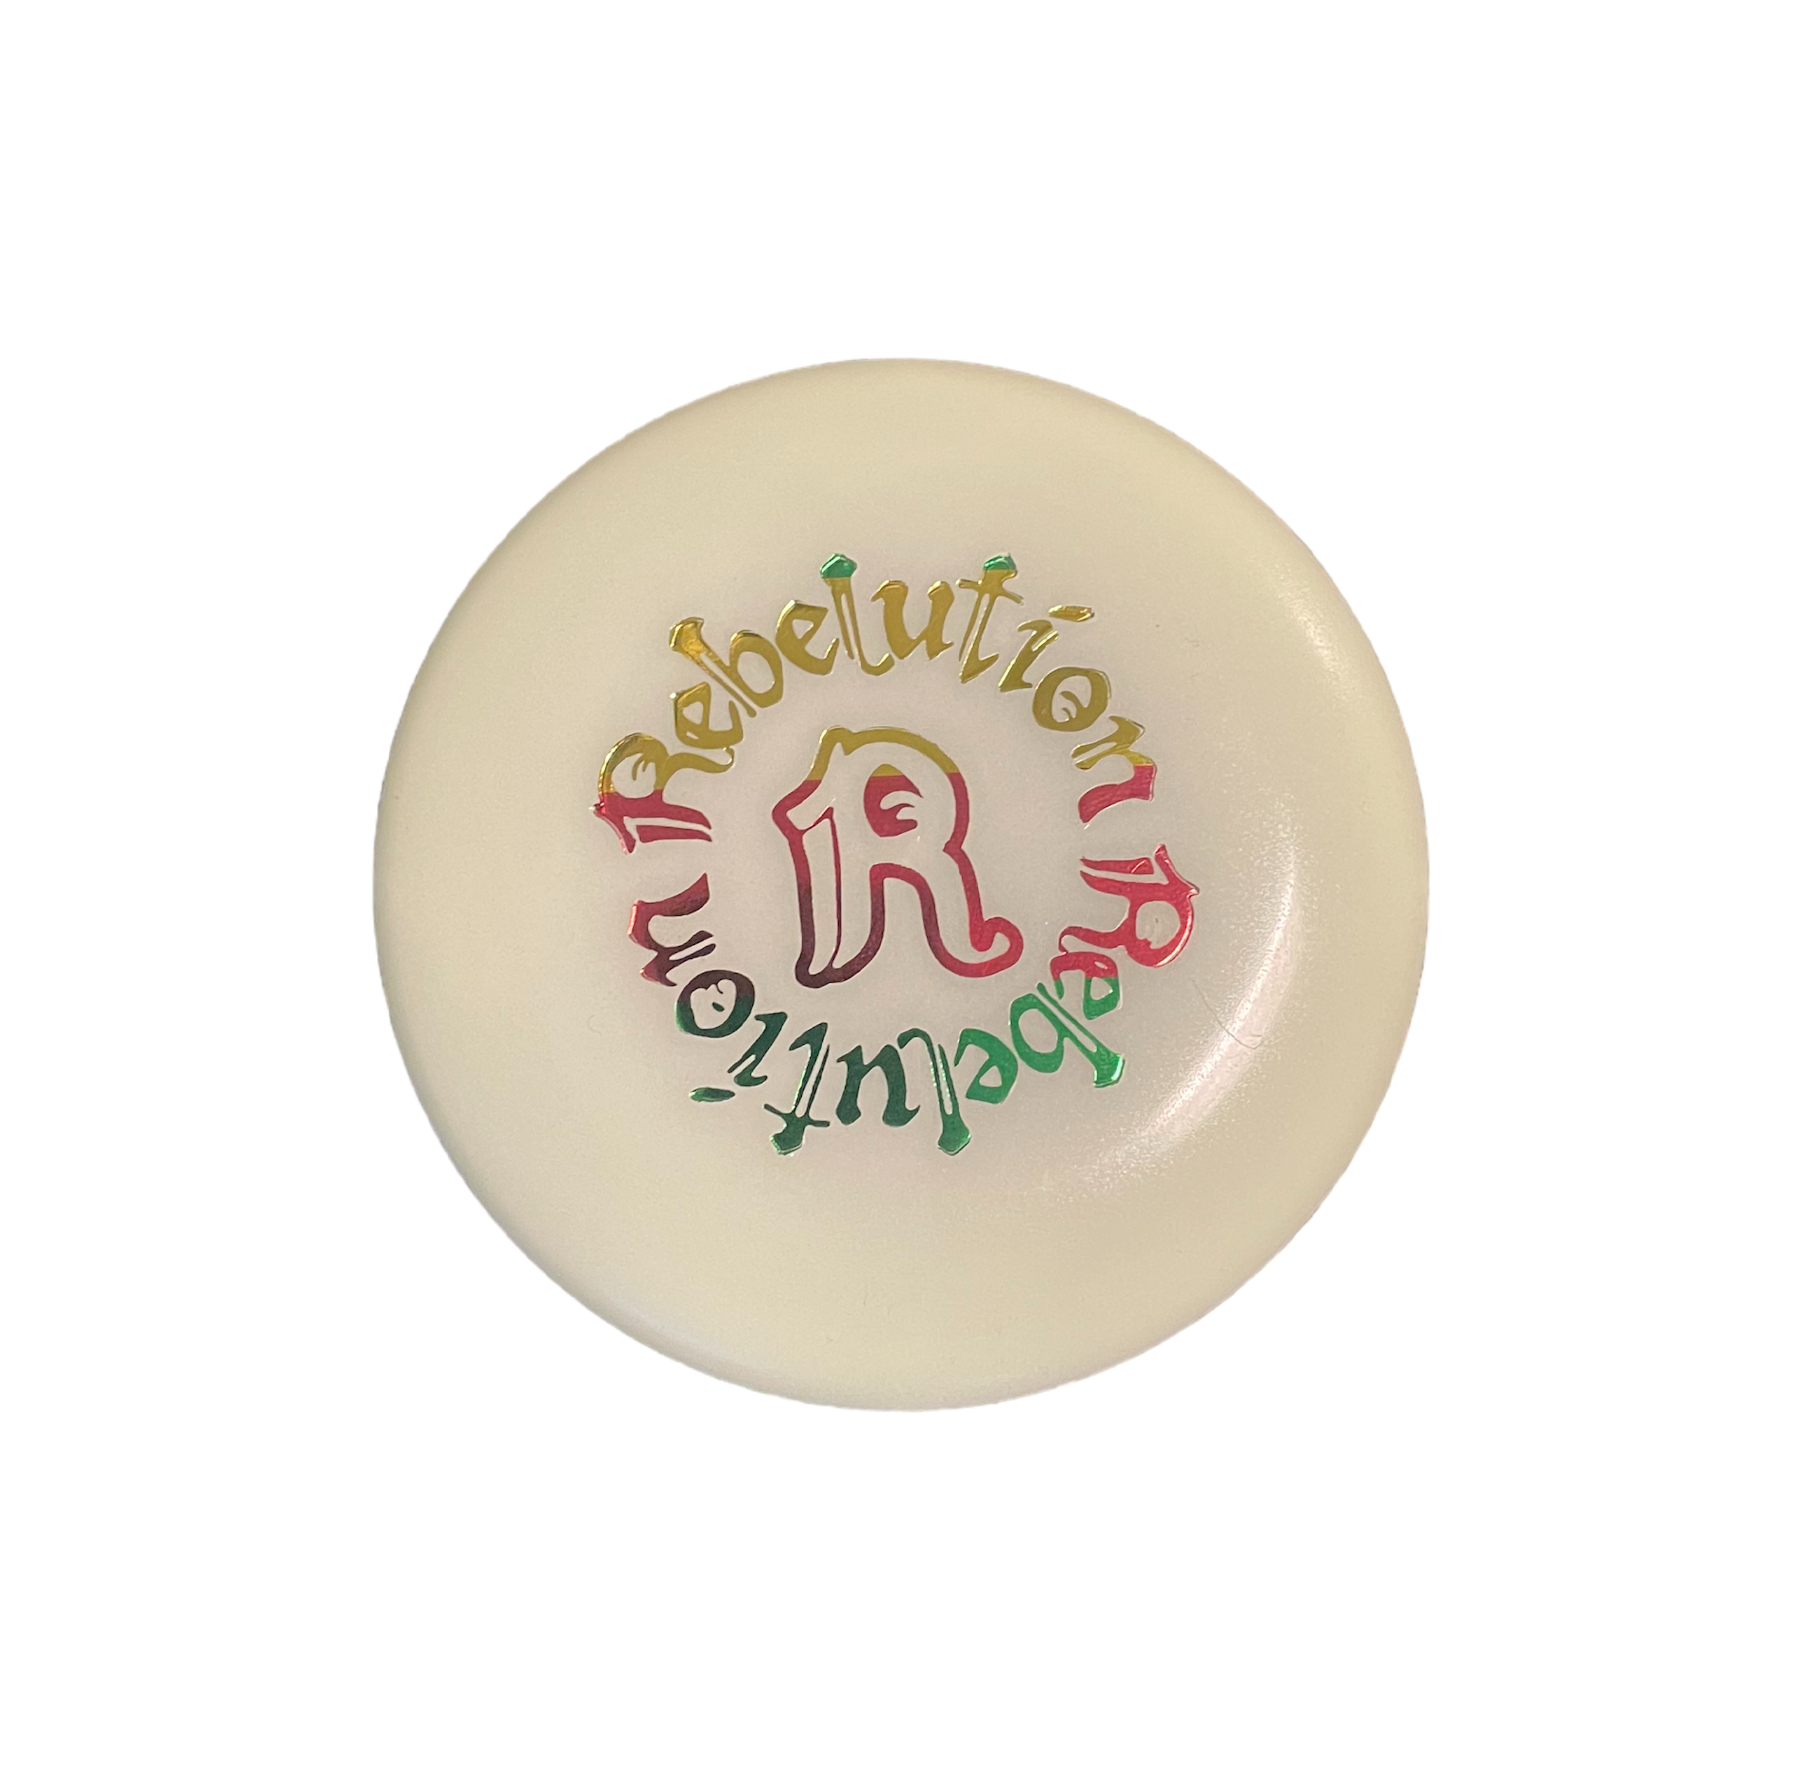 Rebelution Mini Marker Glow Disc Golf Disc by Innova